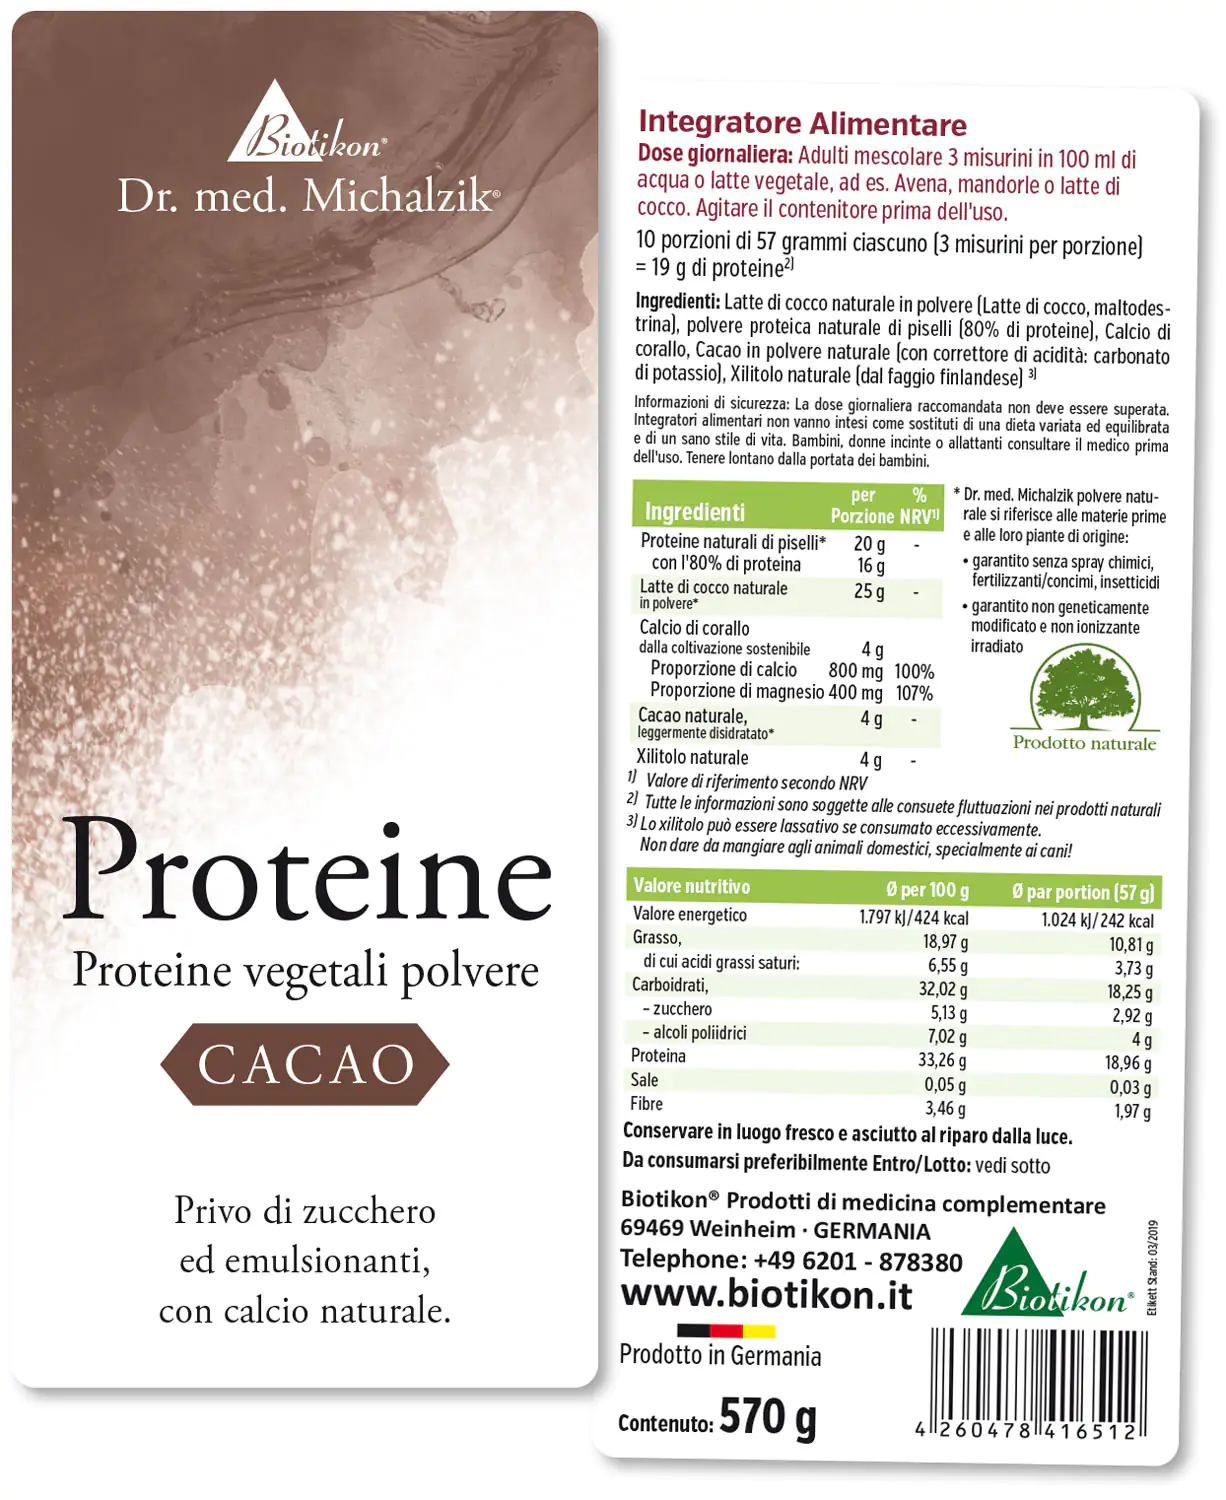 Proteine - 3er-Pack, 2x Aronia + Kakao